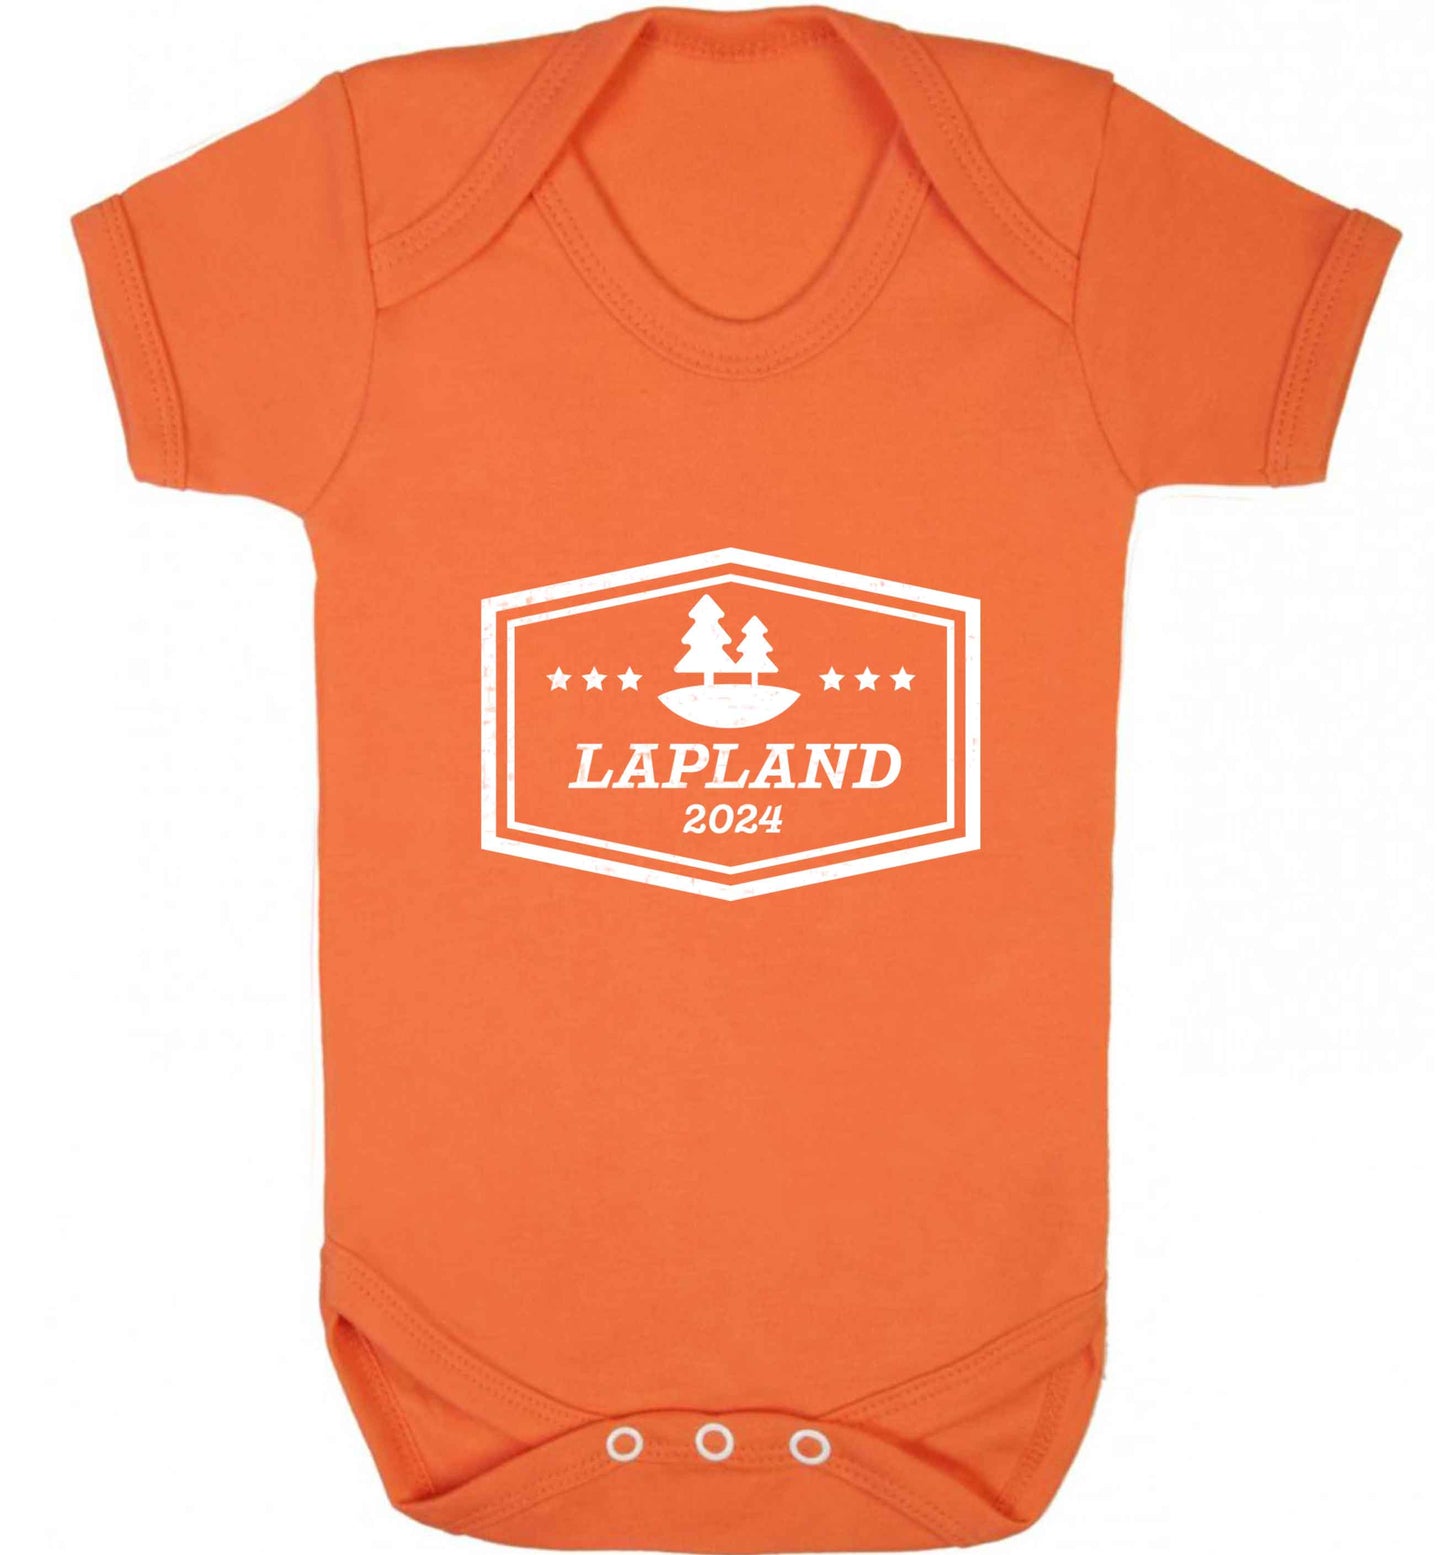 Custom date Lapland baby vest orange 18-24 months